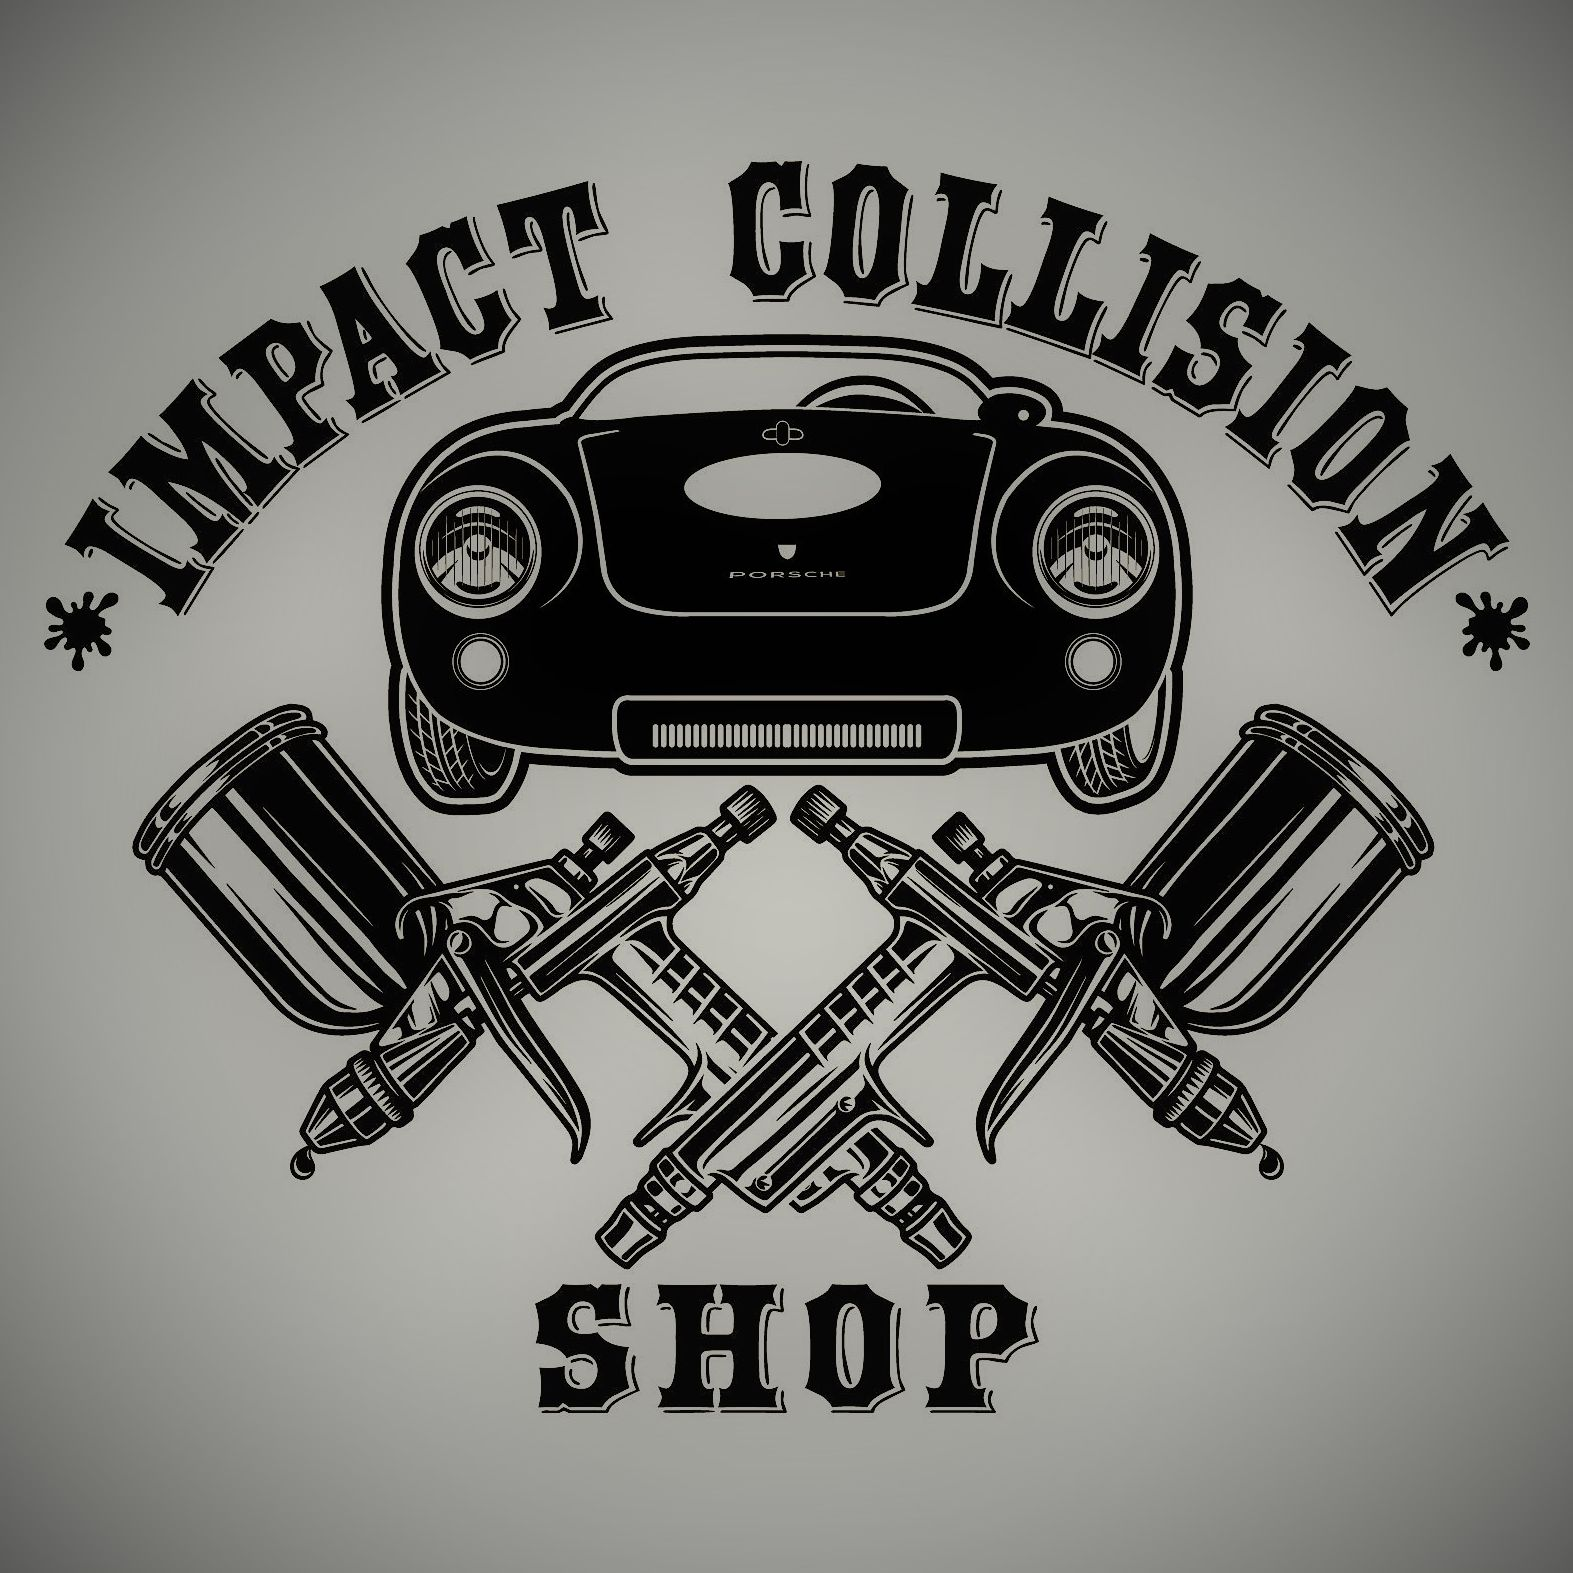 Company Logo For Impact Collision Shop'